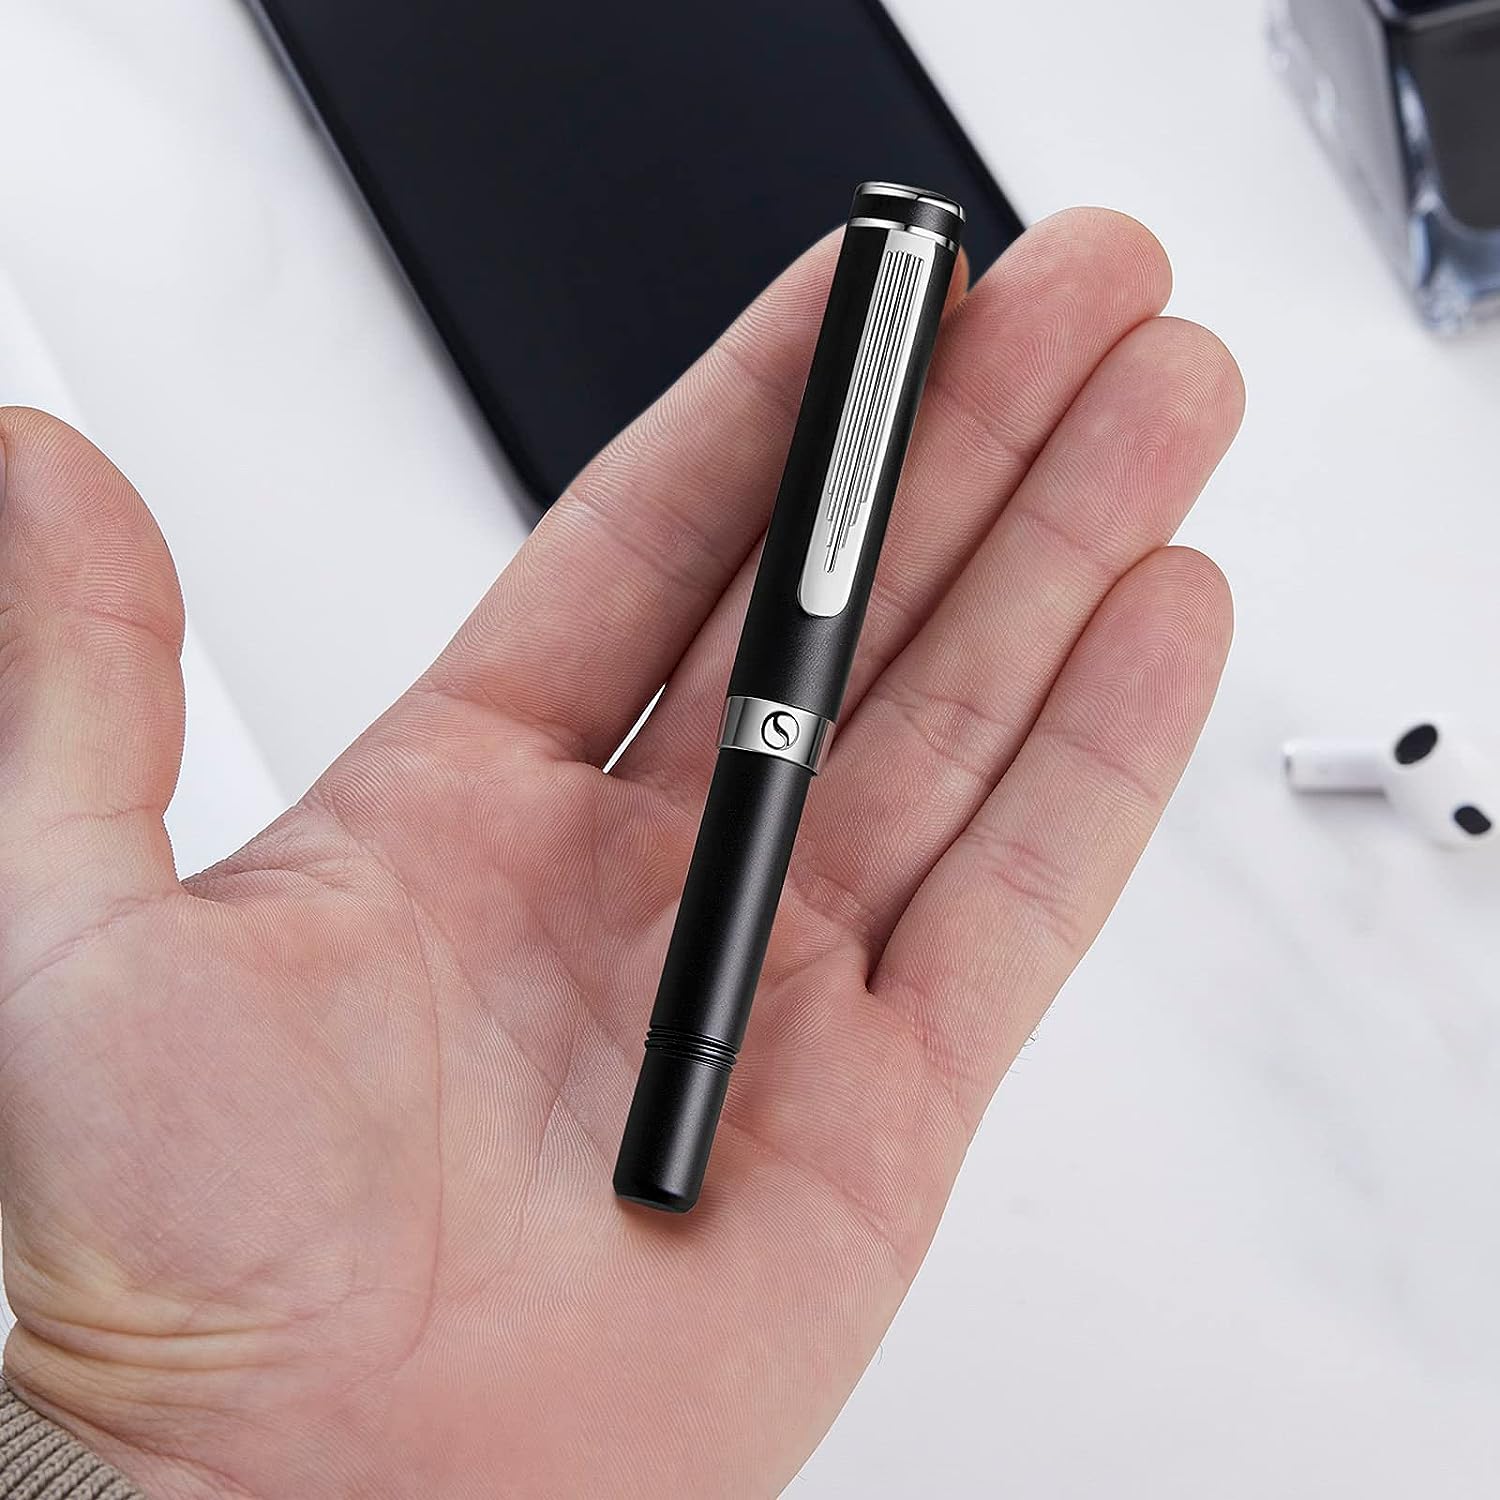 Scriveiner Luxury EDC Fountain Pen (Medium), Stunning Matt Black Pocket Pen, Chrome Finish